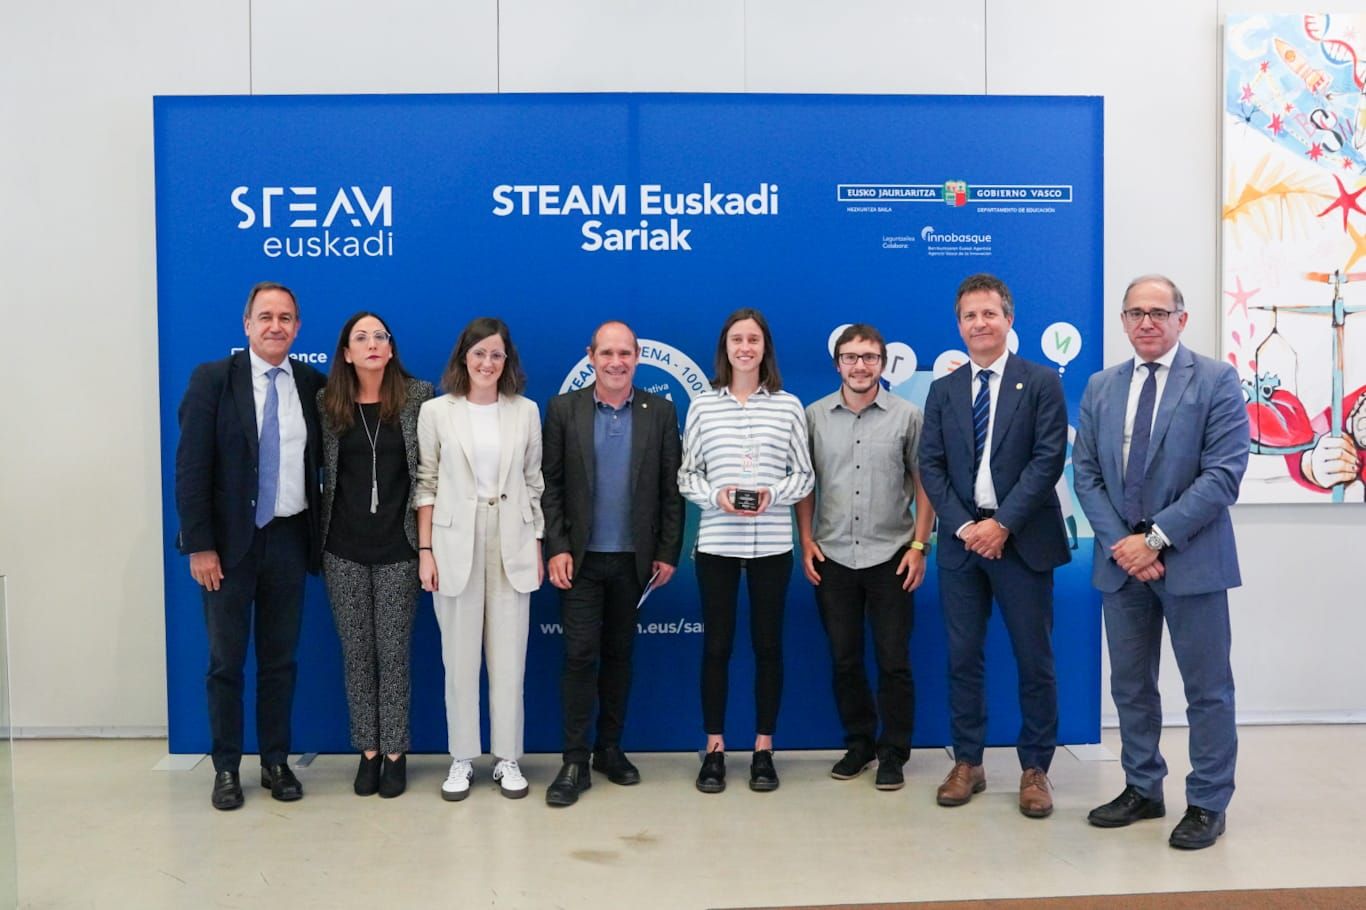 Vicomtech, Mondragon University and Ikaslan Gipuzkoa receive second prize at the STEAM Euskadi awards with their joint project: STEMotiv